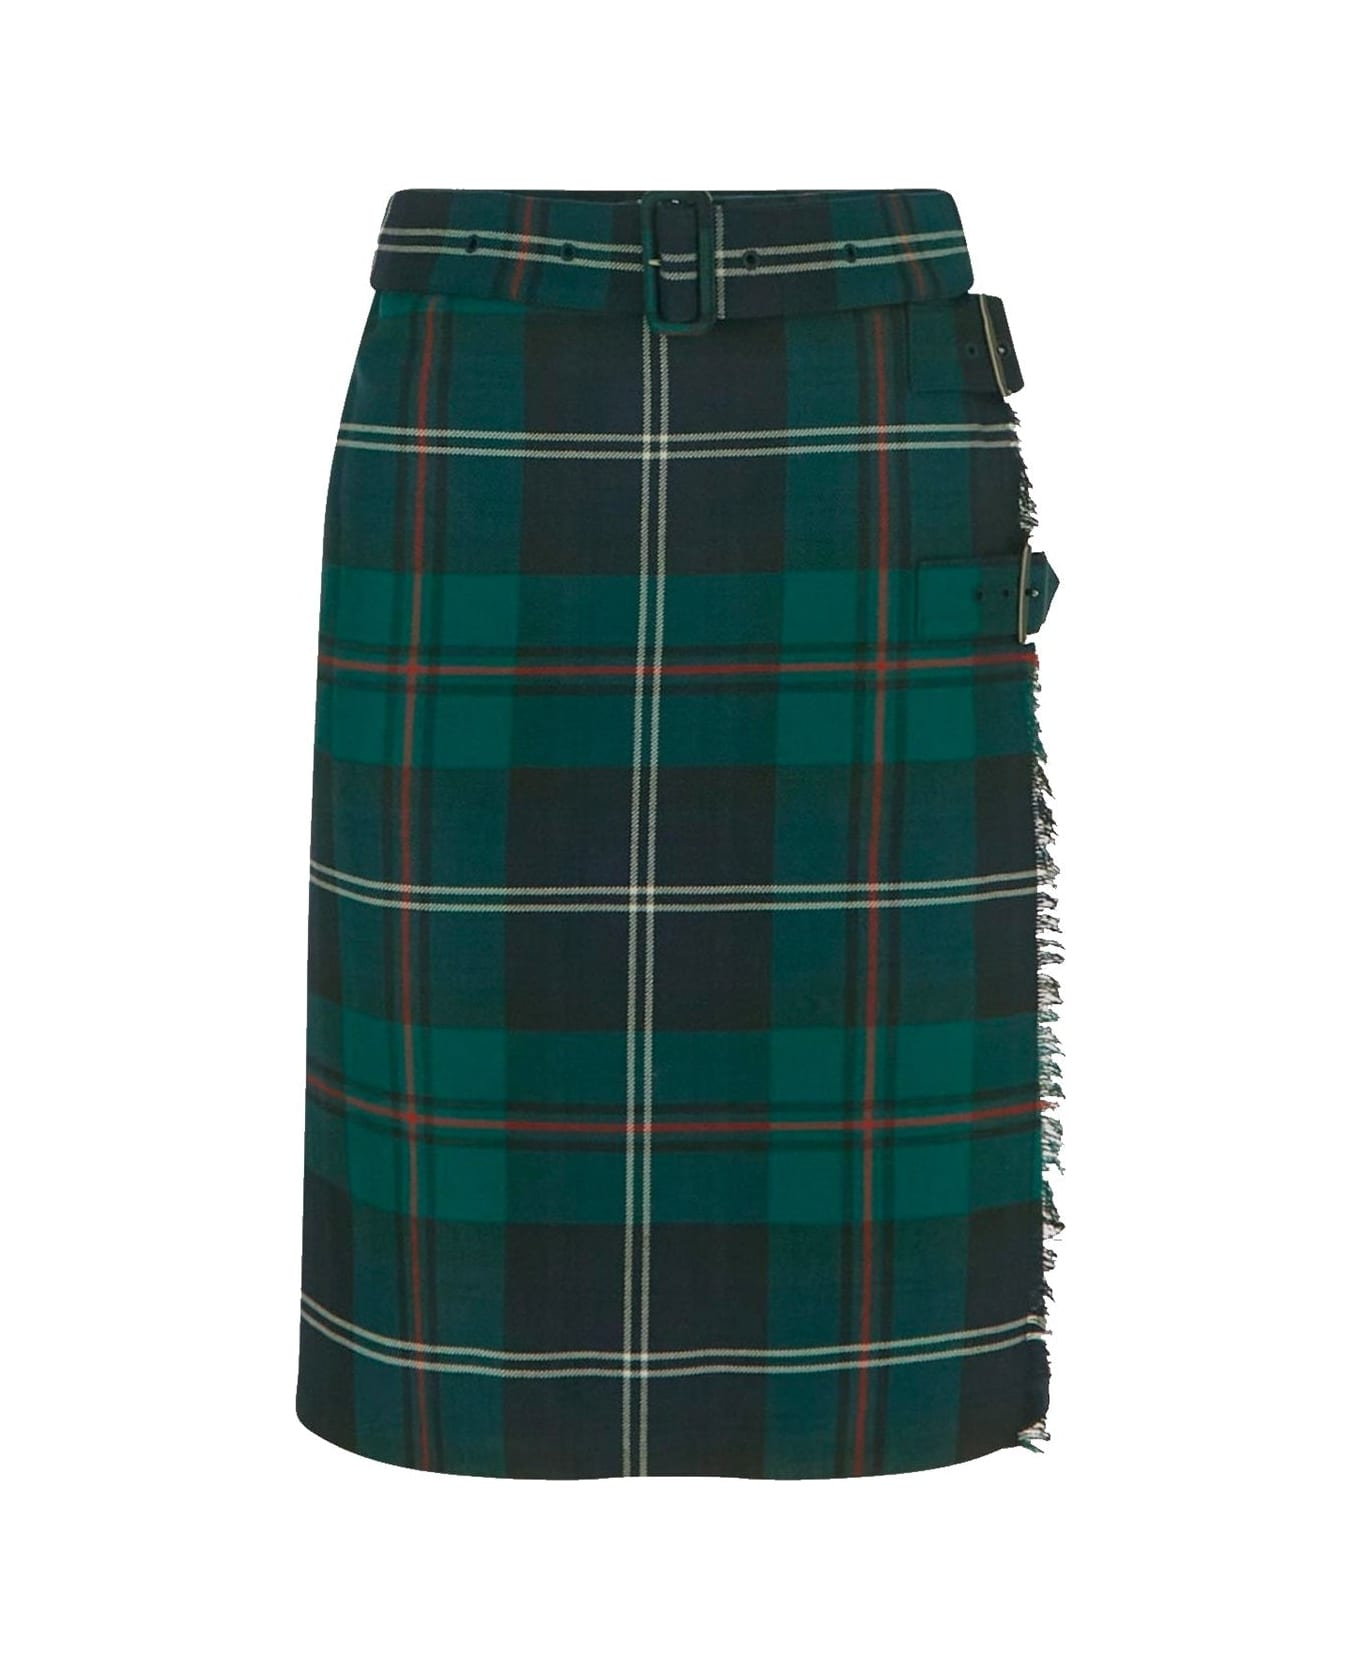 Burberry Tartan Kilt Skirt - Green